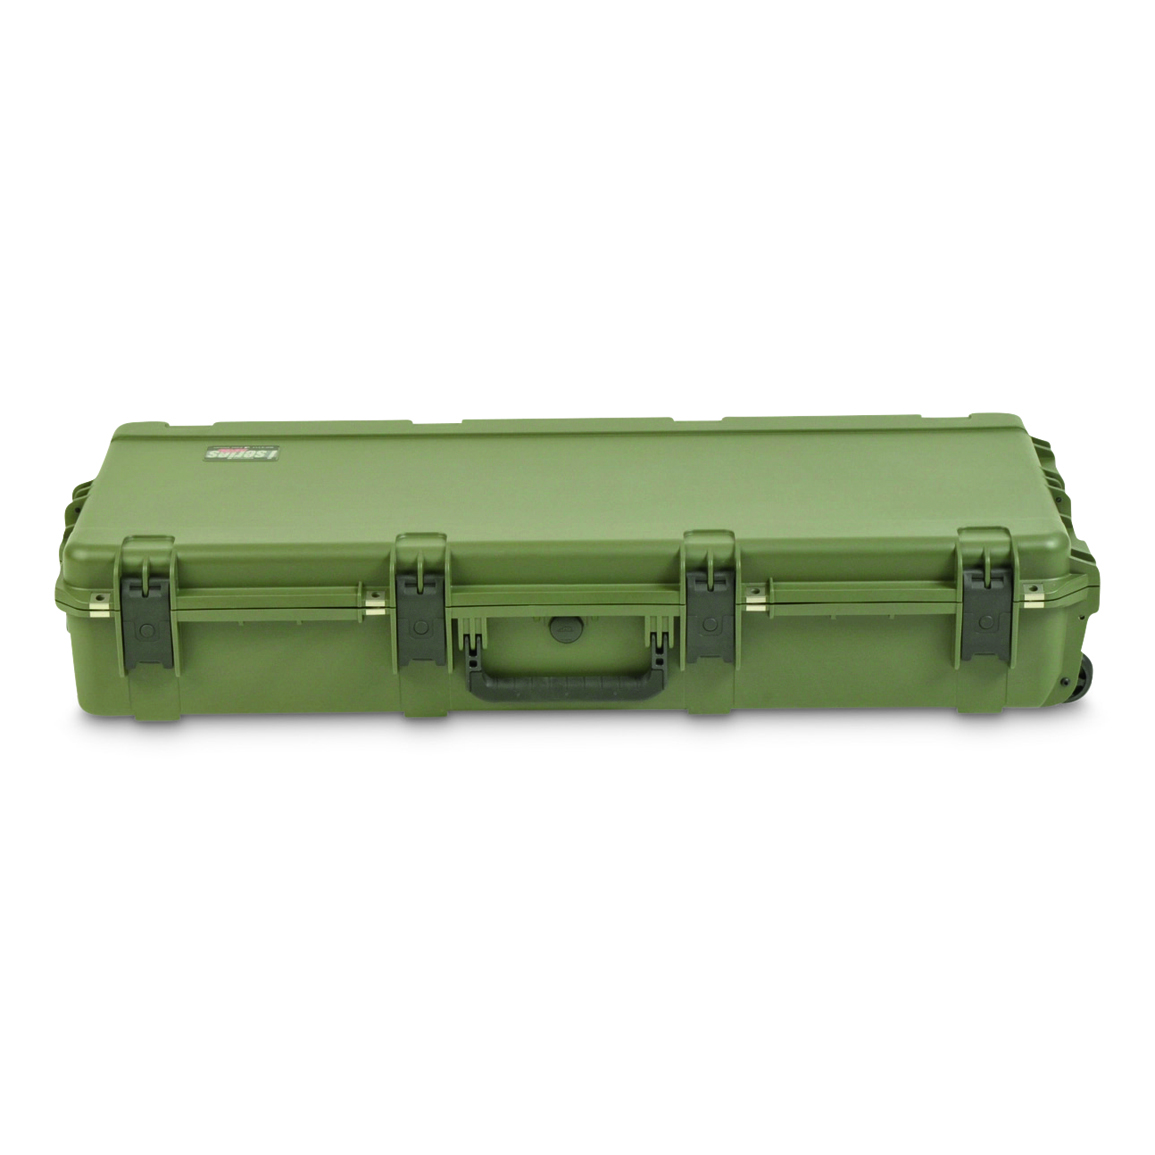 SKB iSeries 4217-7 Wheeled Hard Case, 45x19.75x8.25"h., OD Green